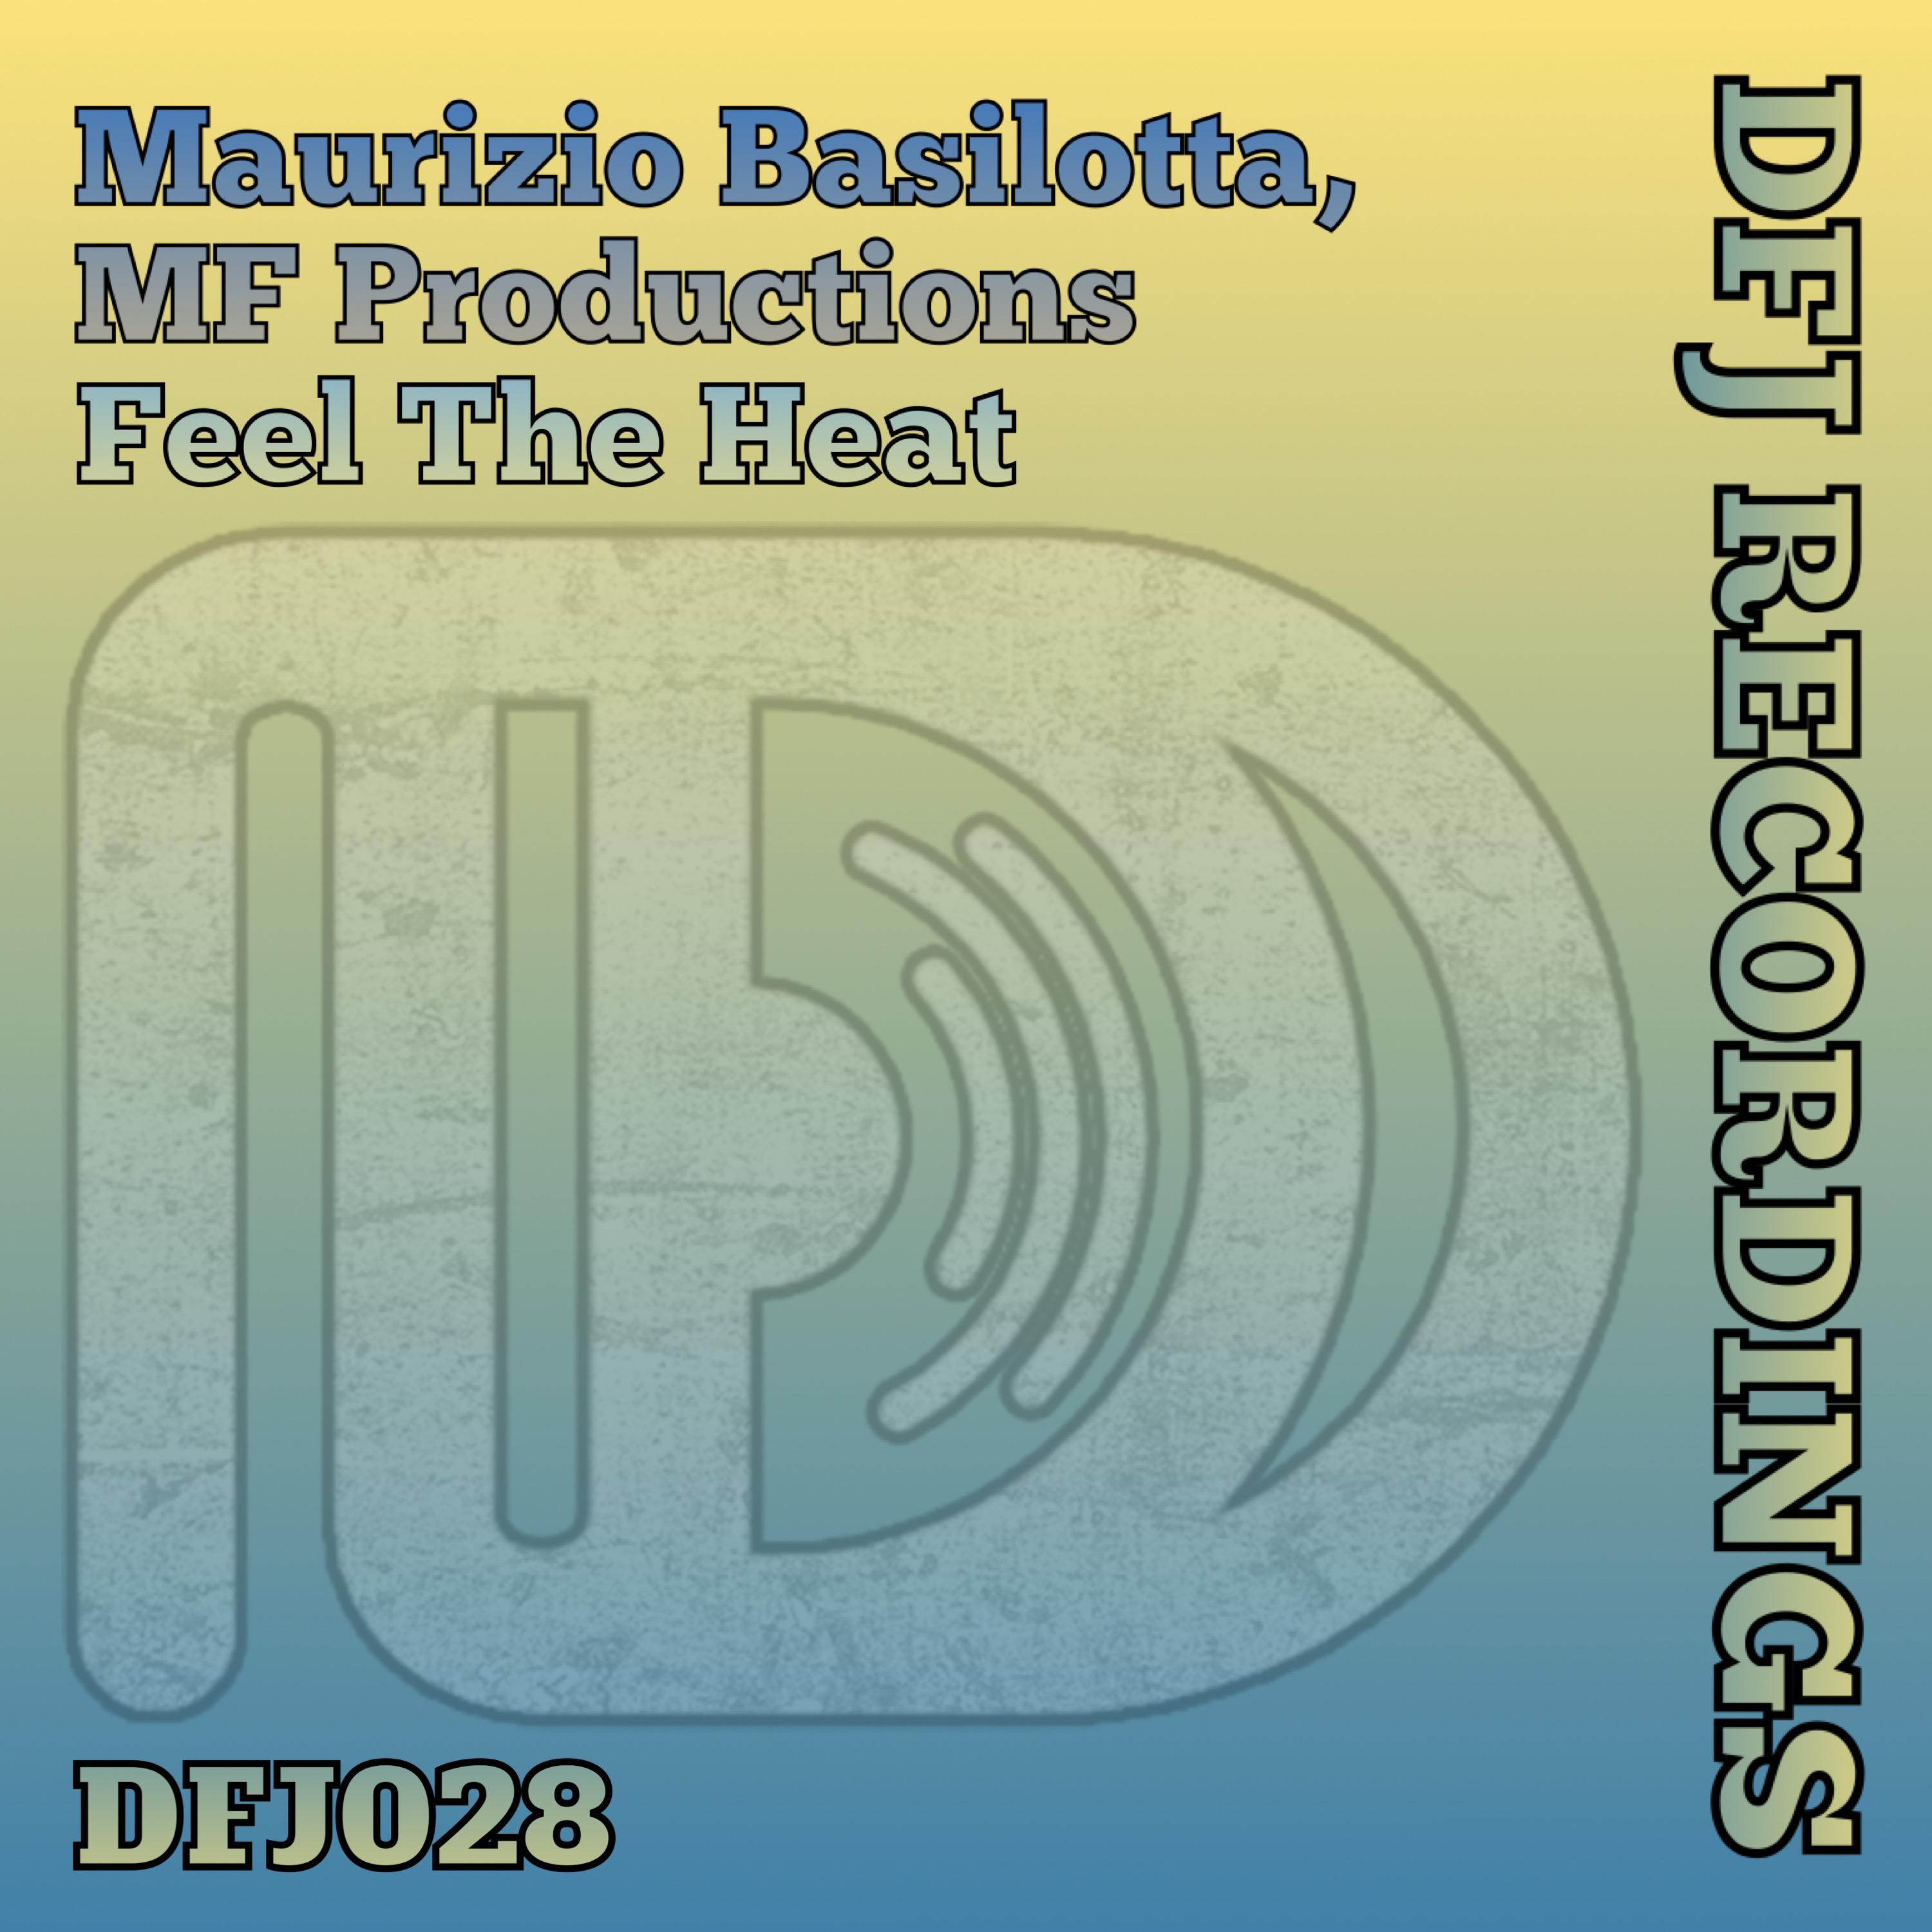 Maurizio Basilotta - Feel The Heat (Radio)